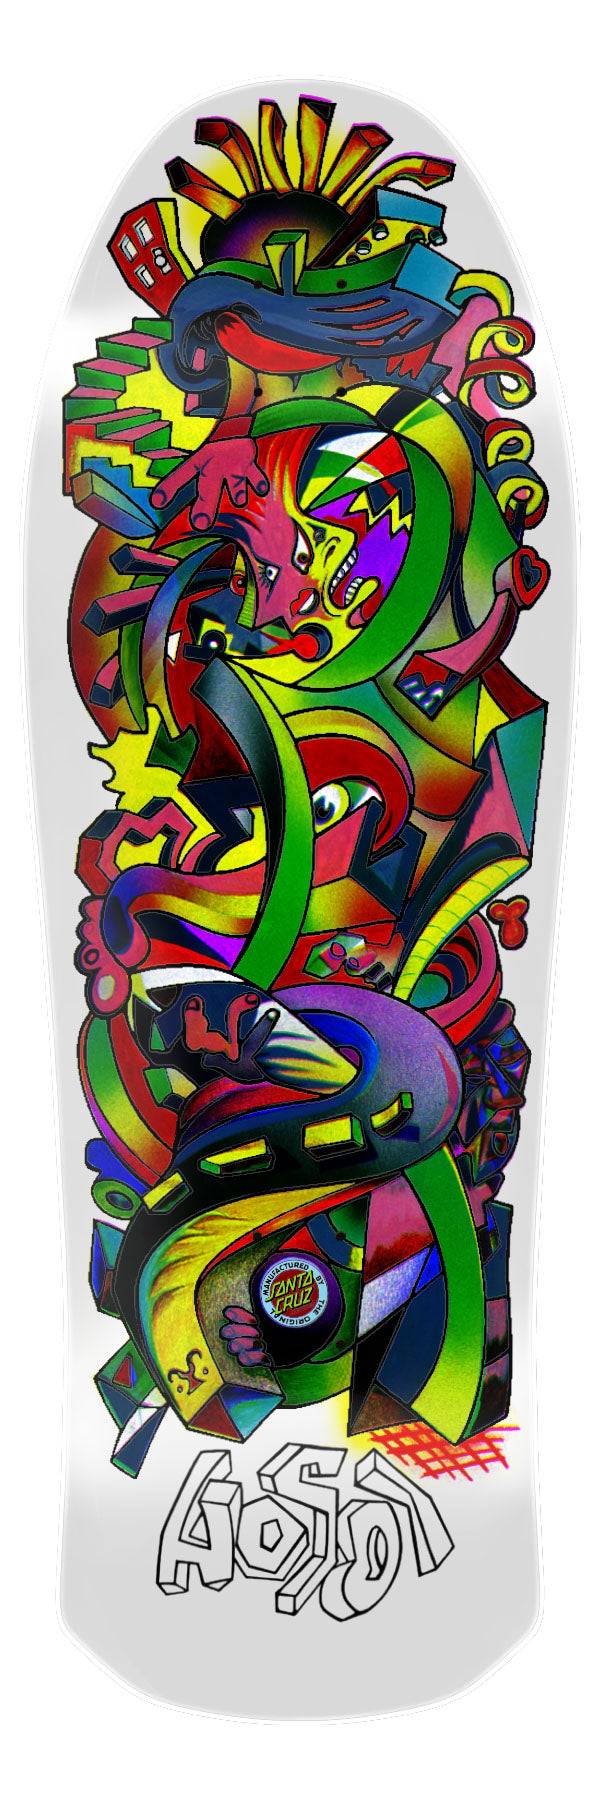 Hosoi Picasso Reissue Skateboard Deck 10.26in x 30.42in Santa Cruz Sunny Smith LLC